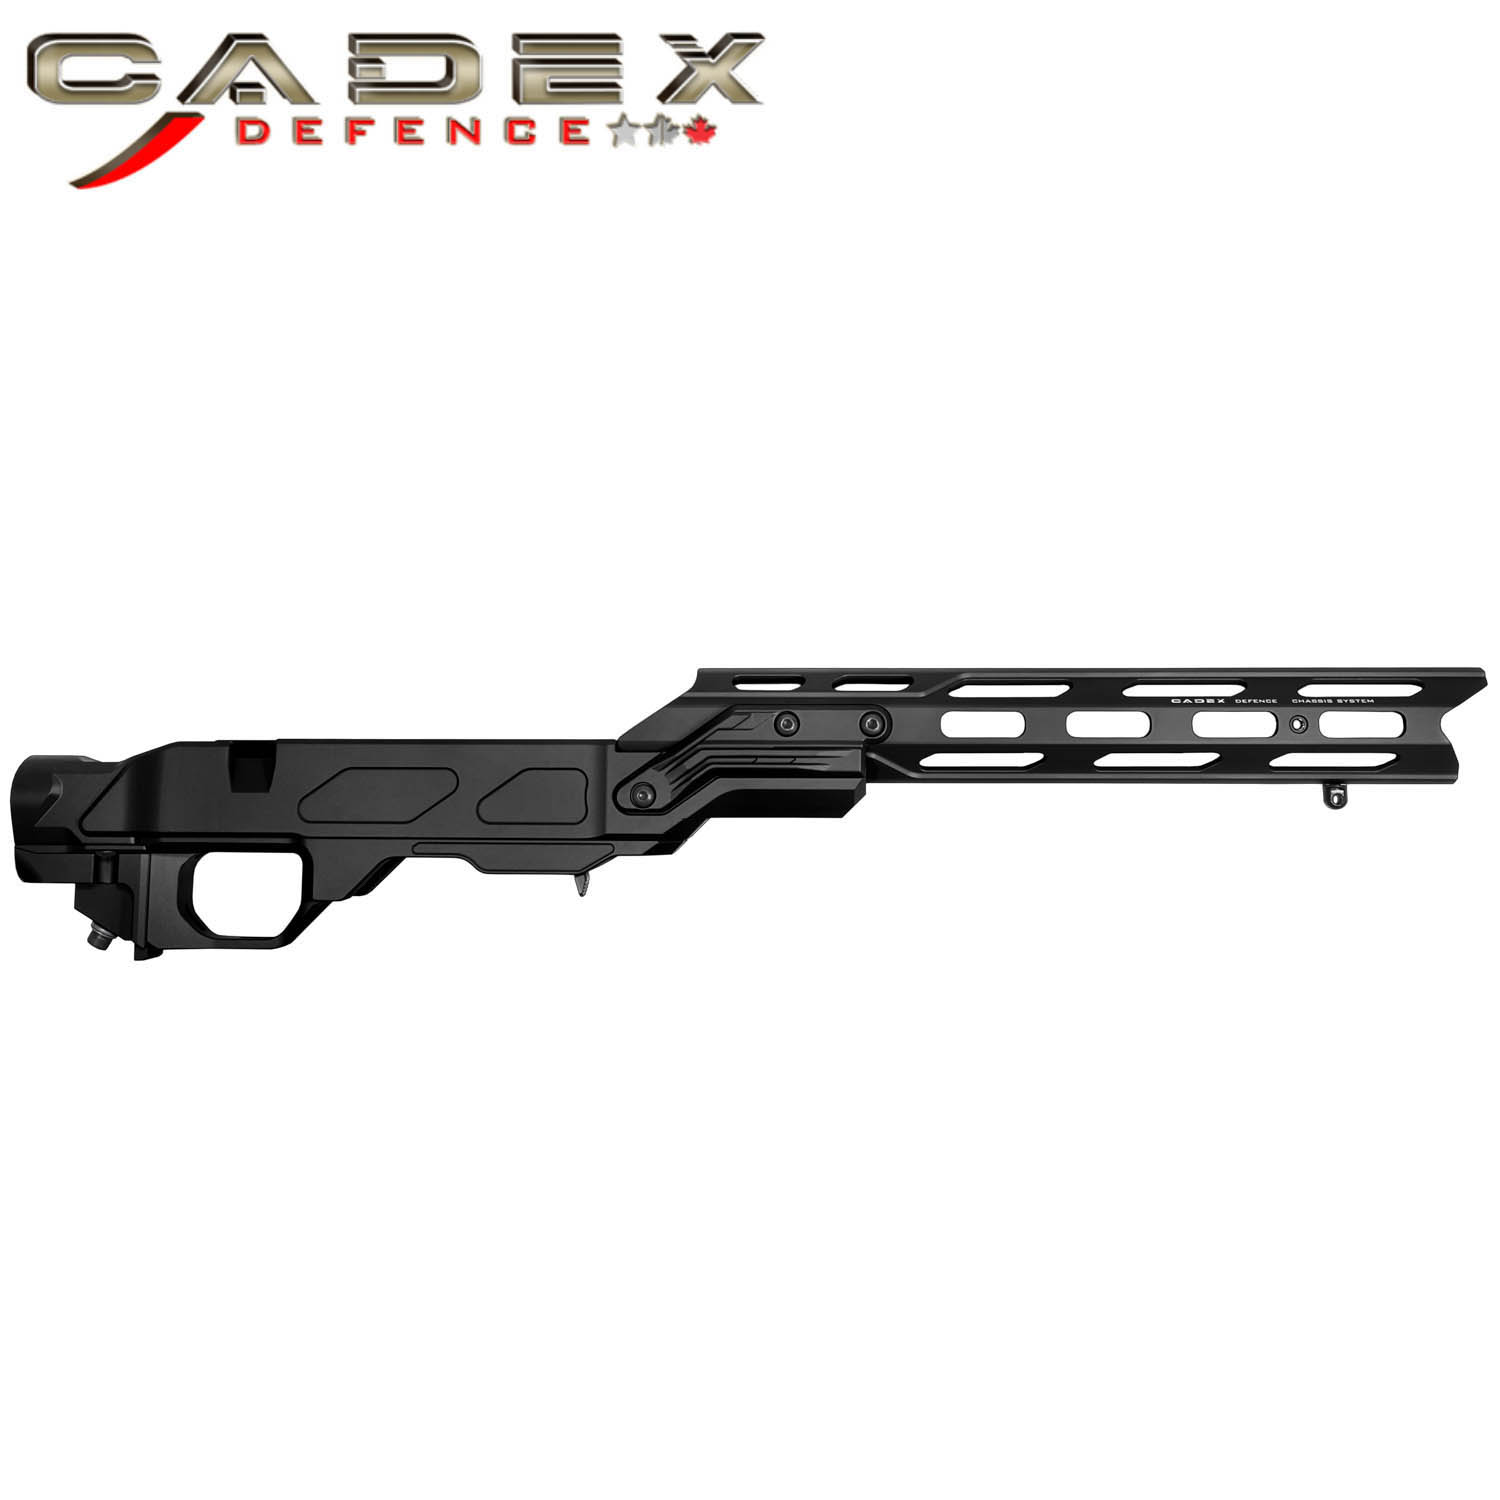 Cadex Defense OT Core Rifle Chassis, RH Tikka T3 Long Action